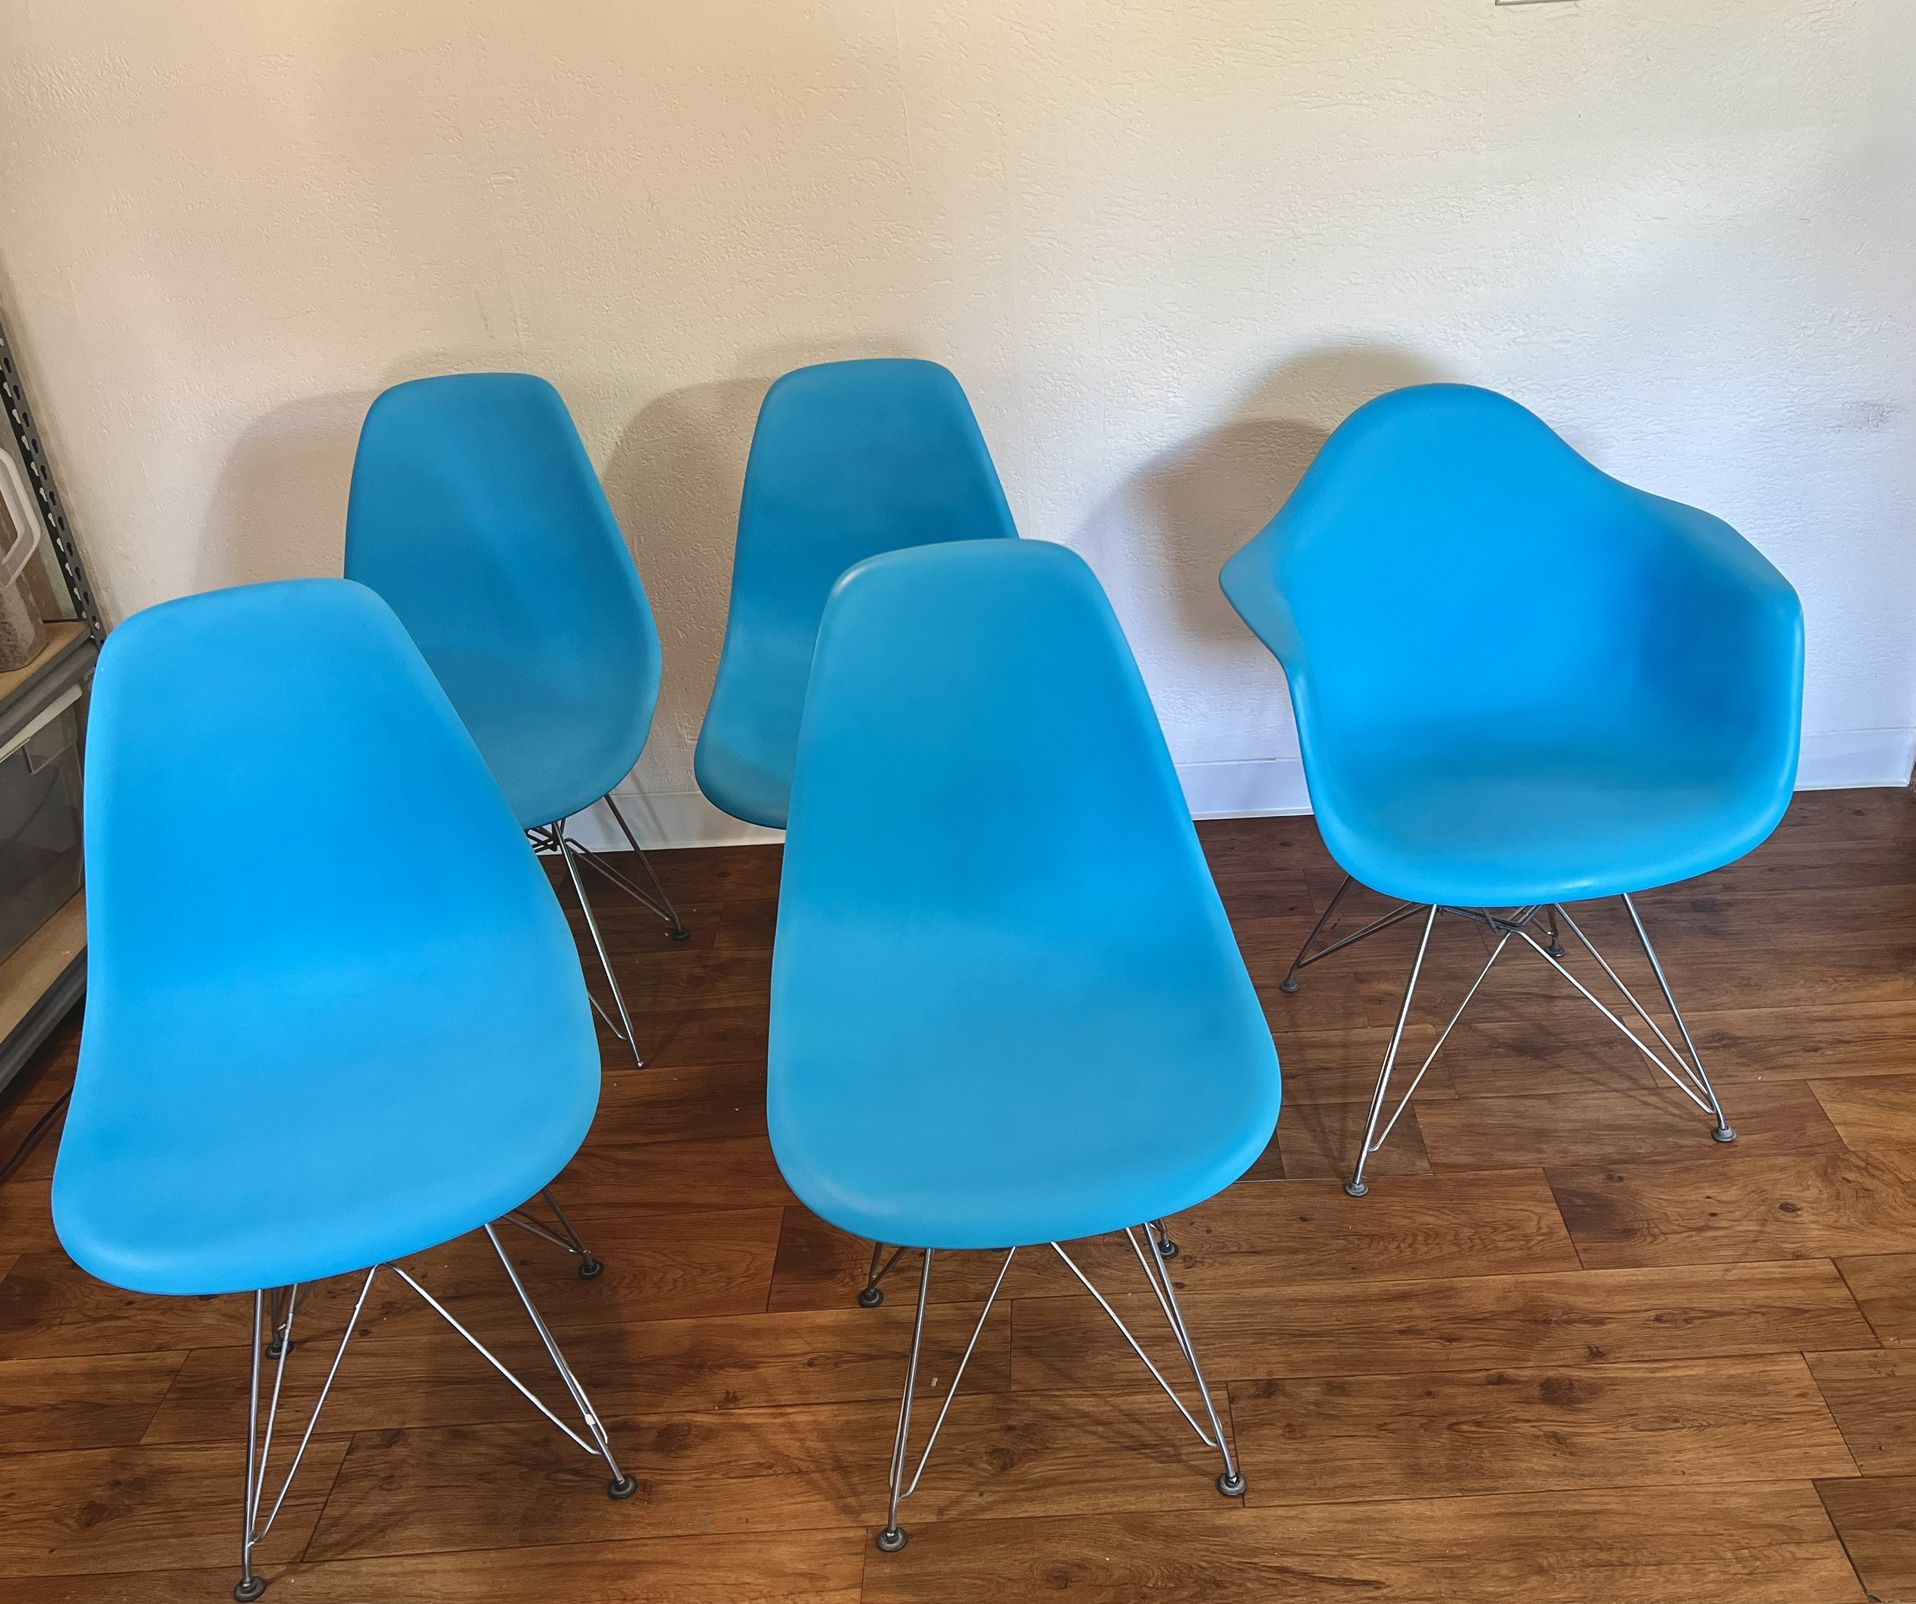 VINTAGE 5 piece set | MCM Herman Miller Eams inspired chairs, sky blue